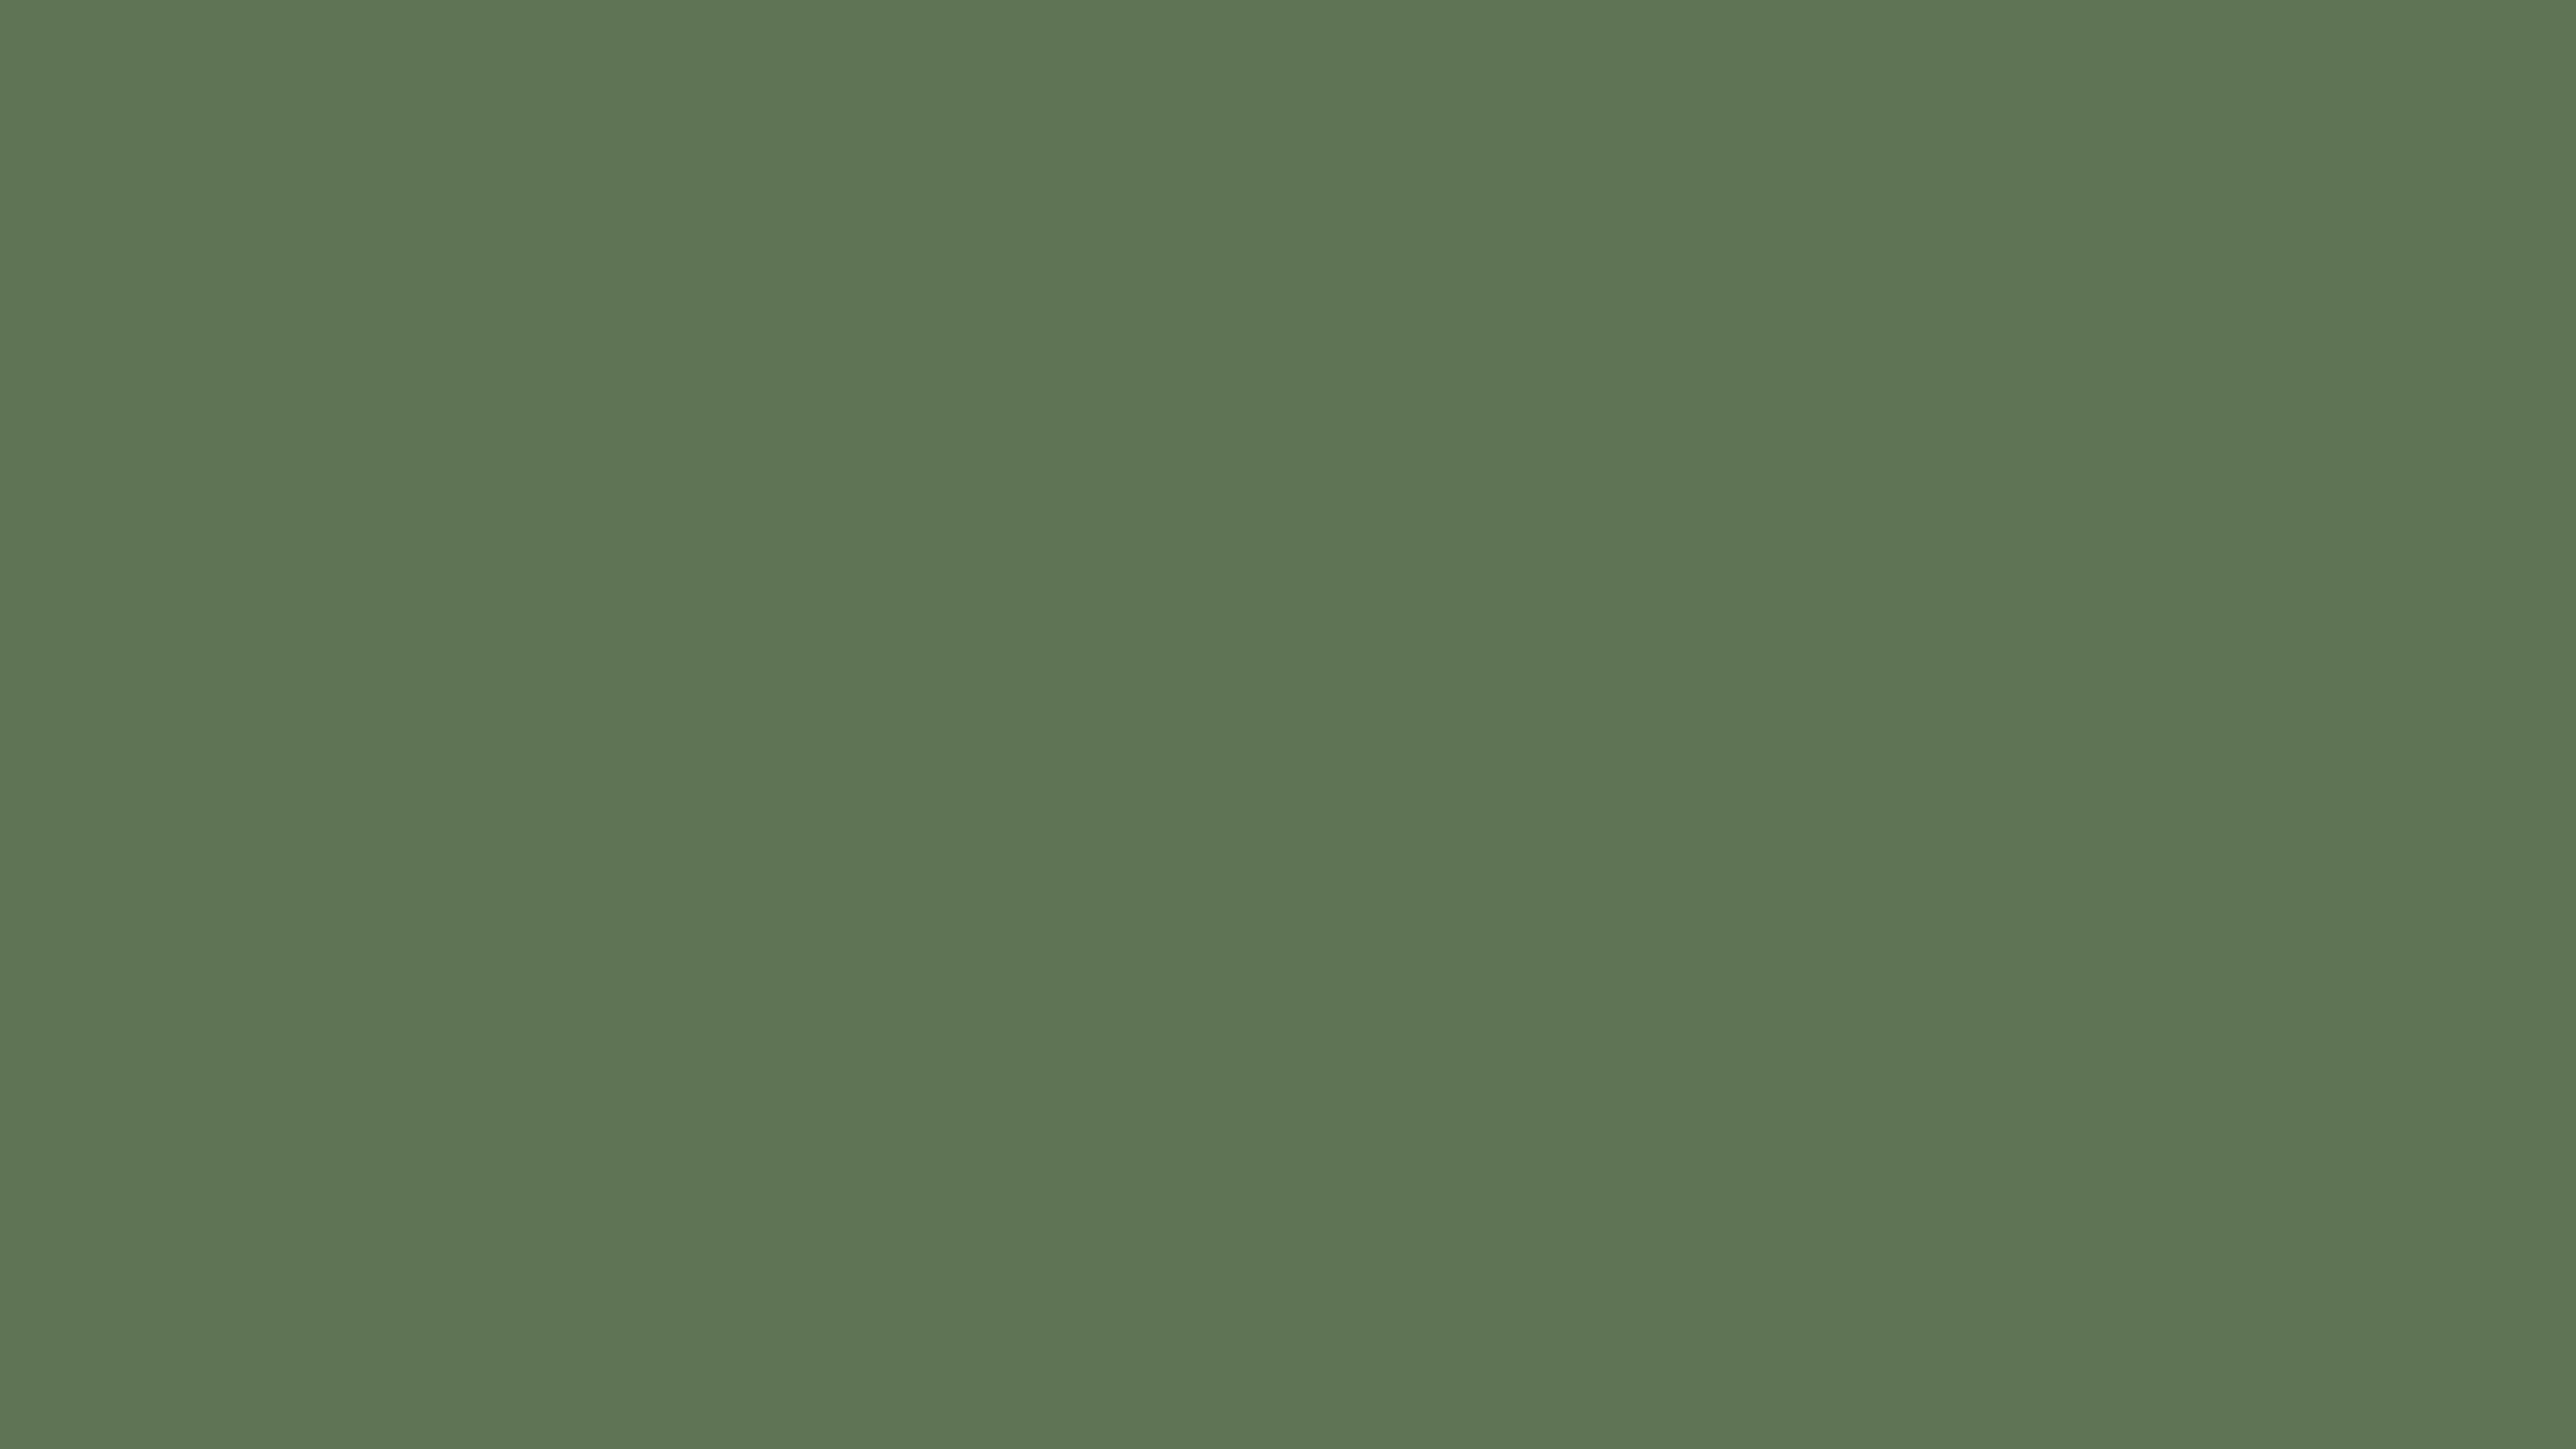 Vineyard Green Solid Color Background Image | Free Image Generator